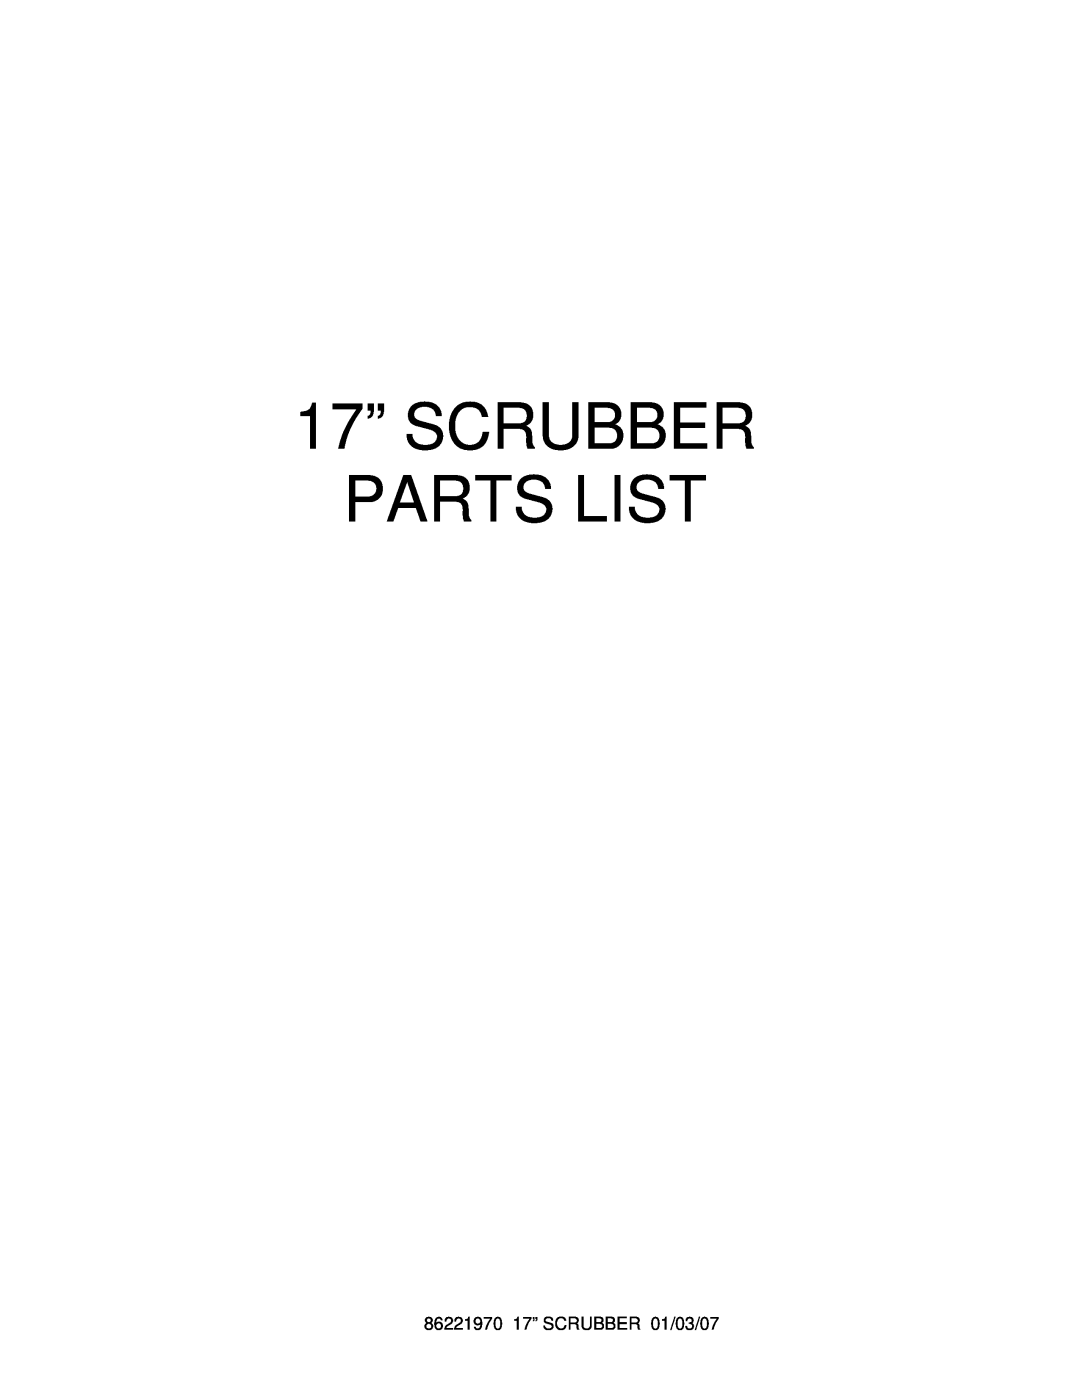 Windsor manual 17” SCRUBBER PARTS LIST, 86221970 17” SCRUBBER 01/03/07 